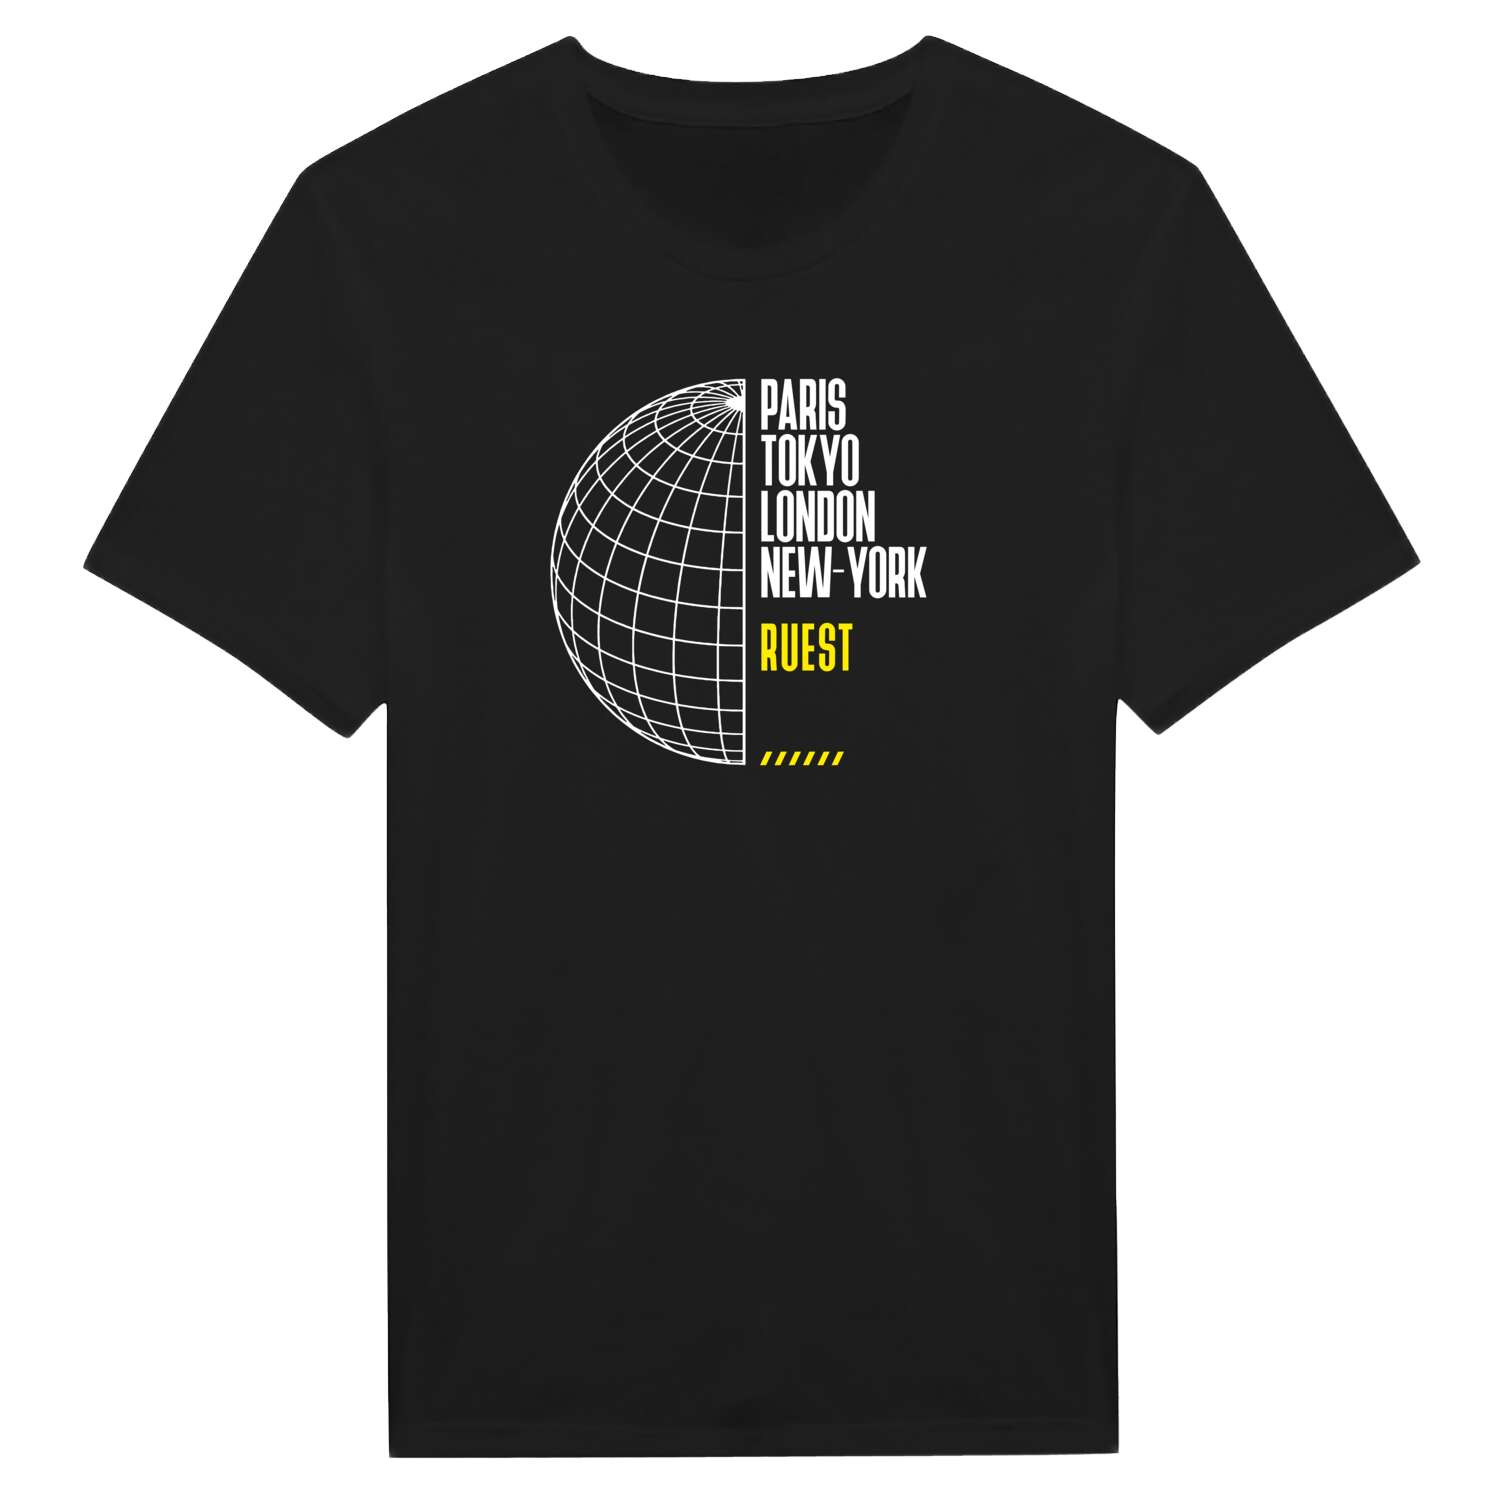 Ruest T-Shirt »Paris Tokyo London«